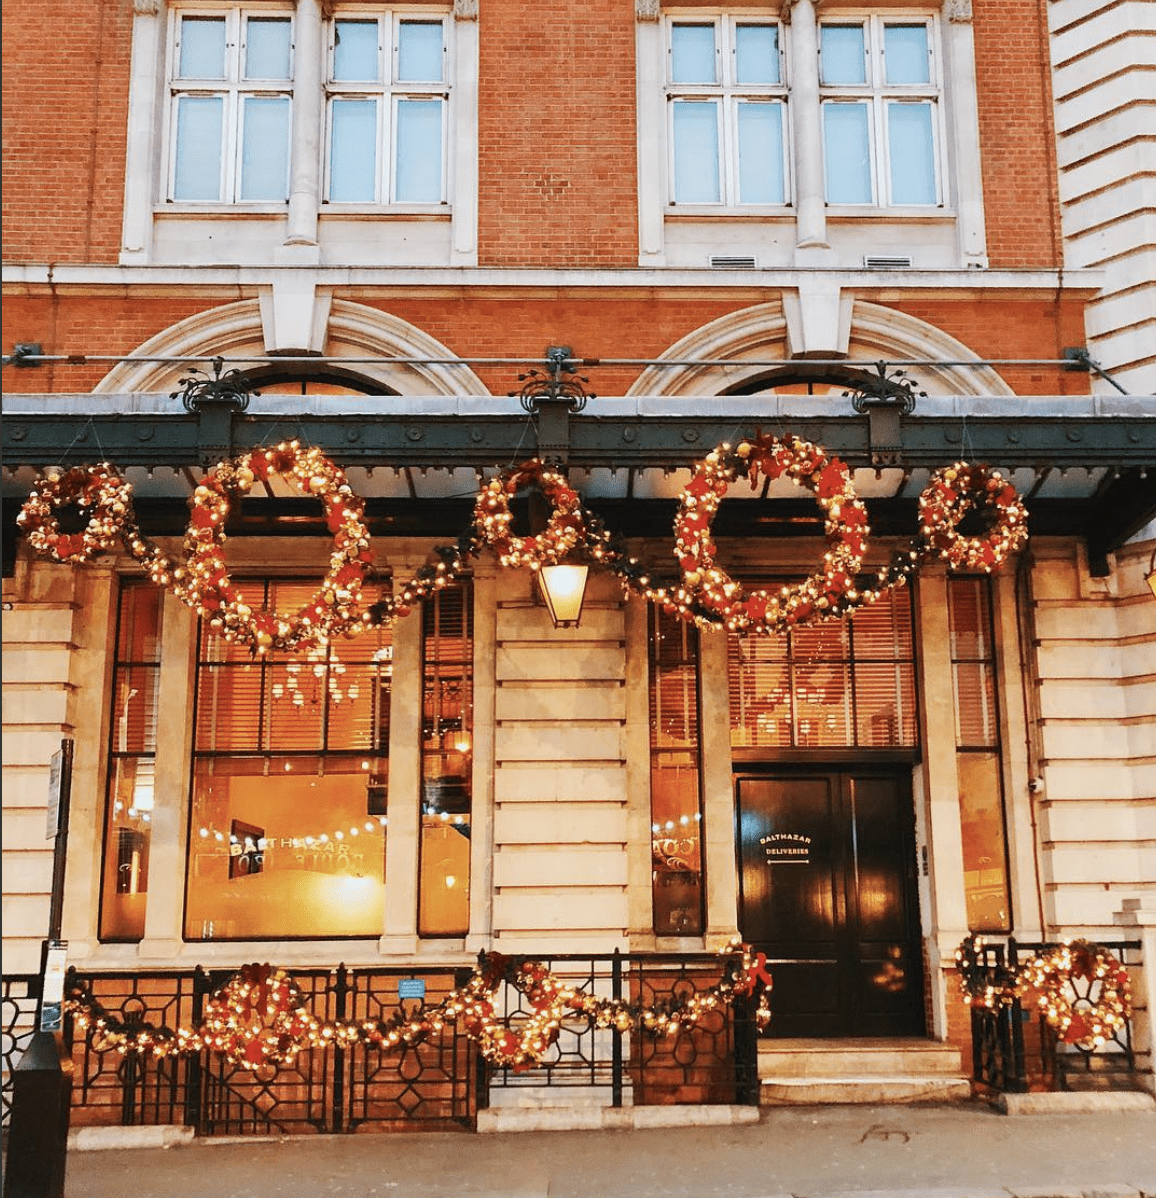 Best Christmas spots in London - London for Christmas